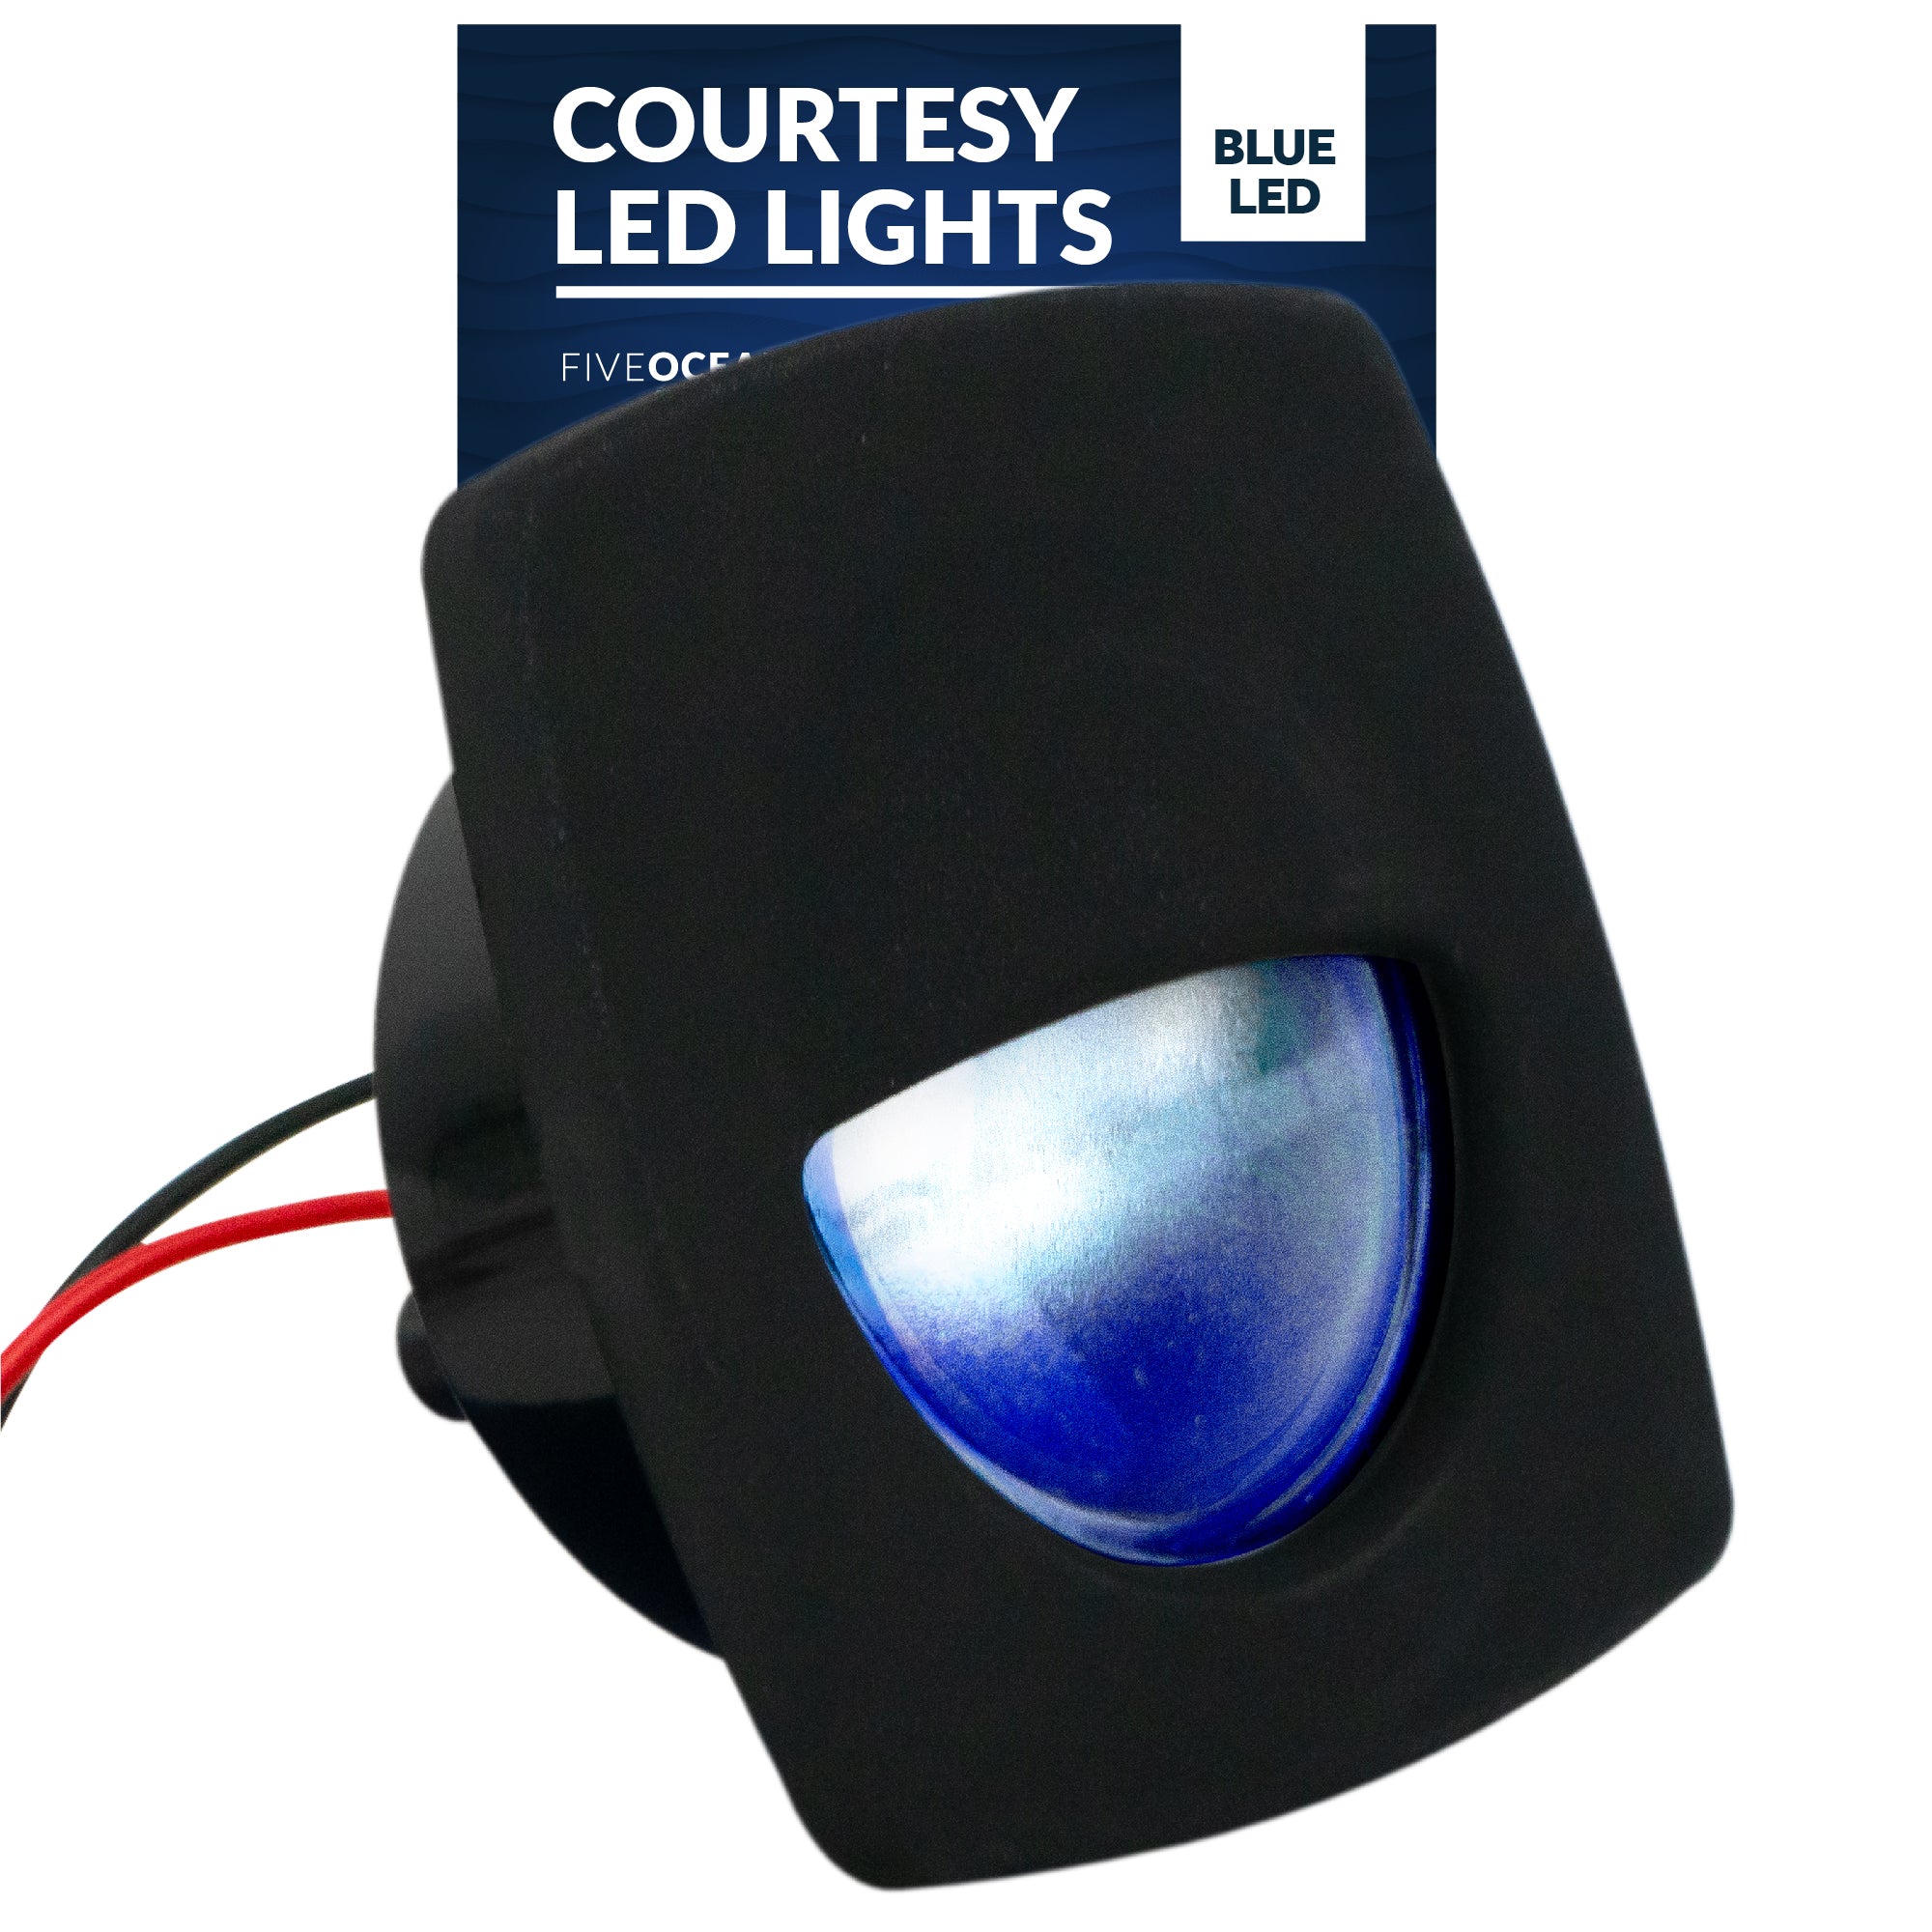 LED Courtesy Companion Way Light, Square, Blue light - FO4002